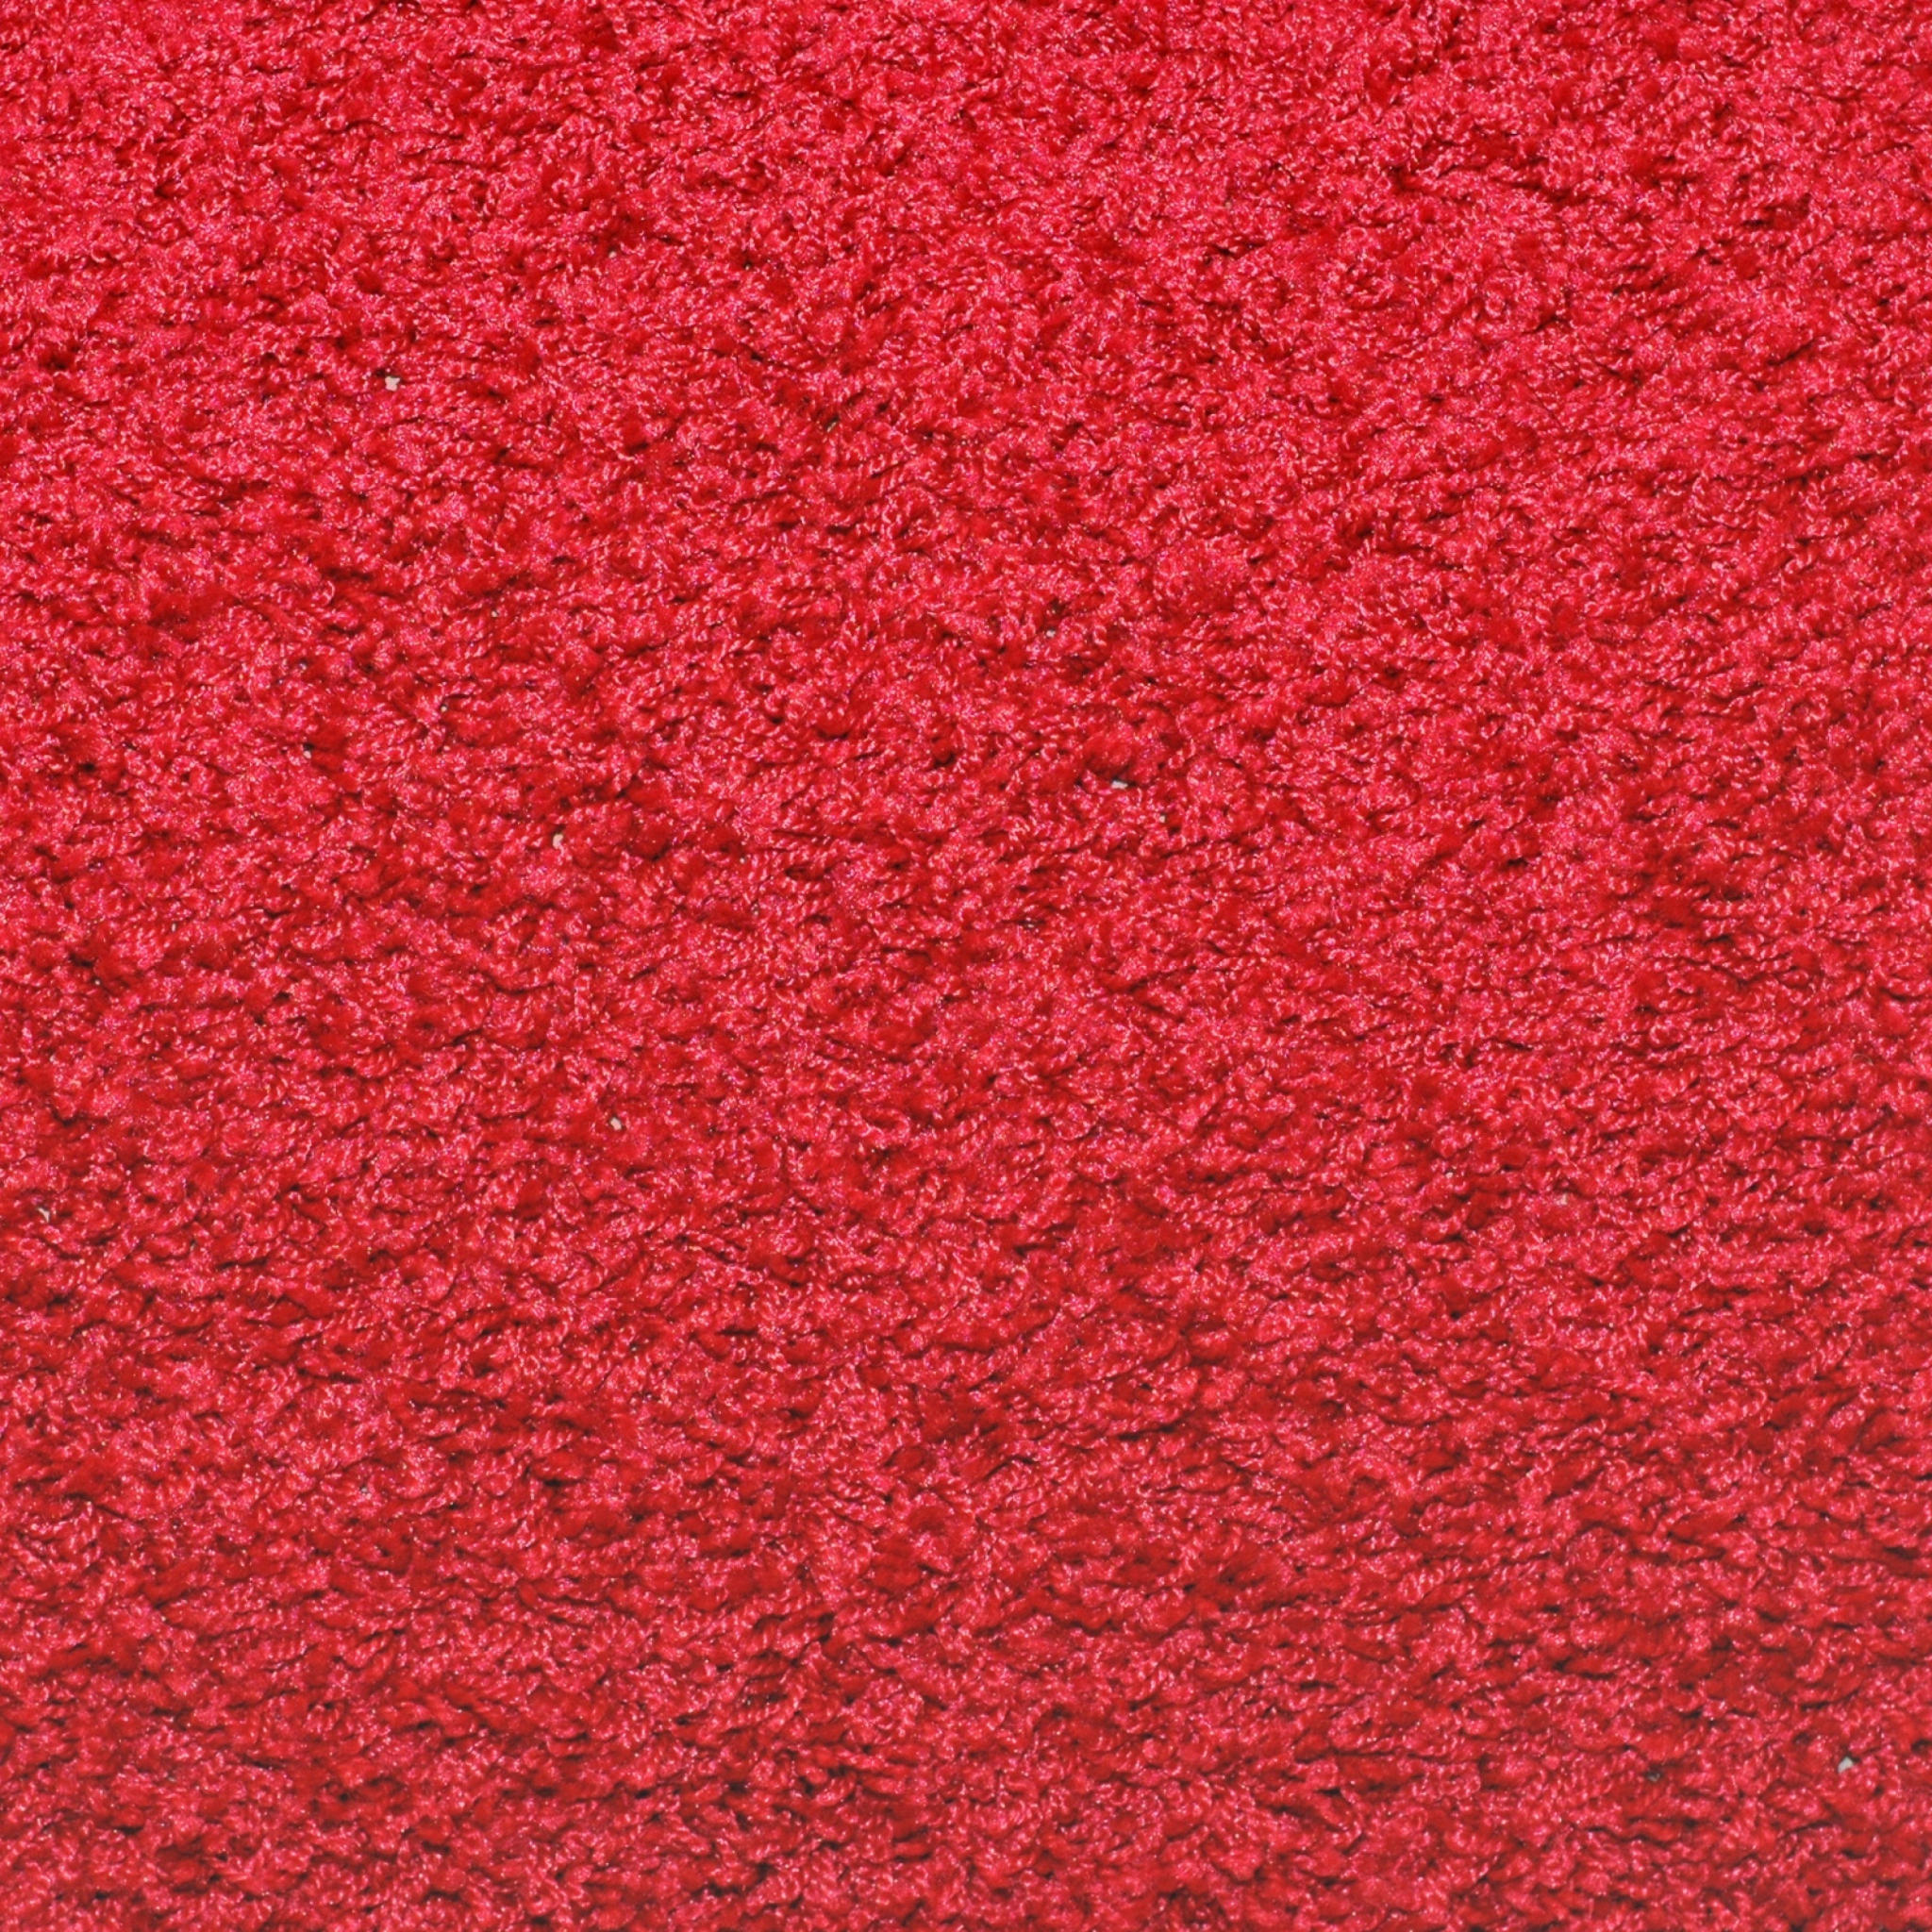 Bright Red Carpet wallpaper 2048x2048